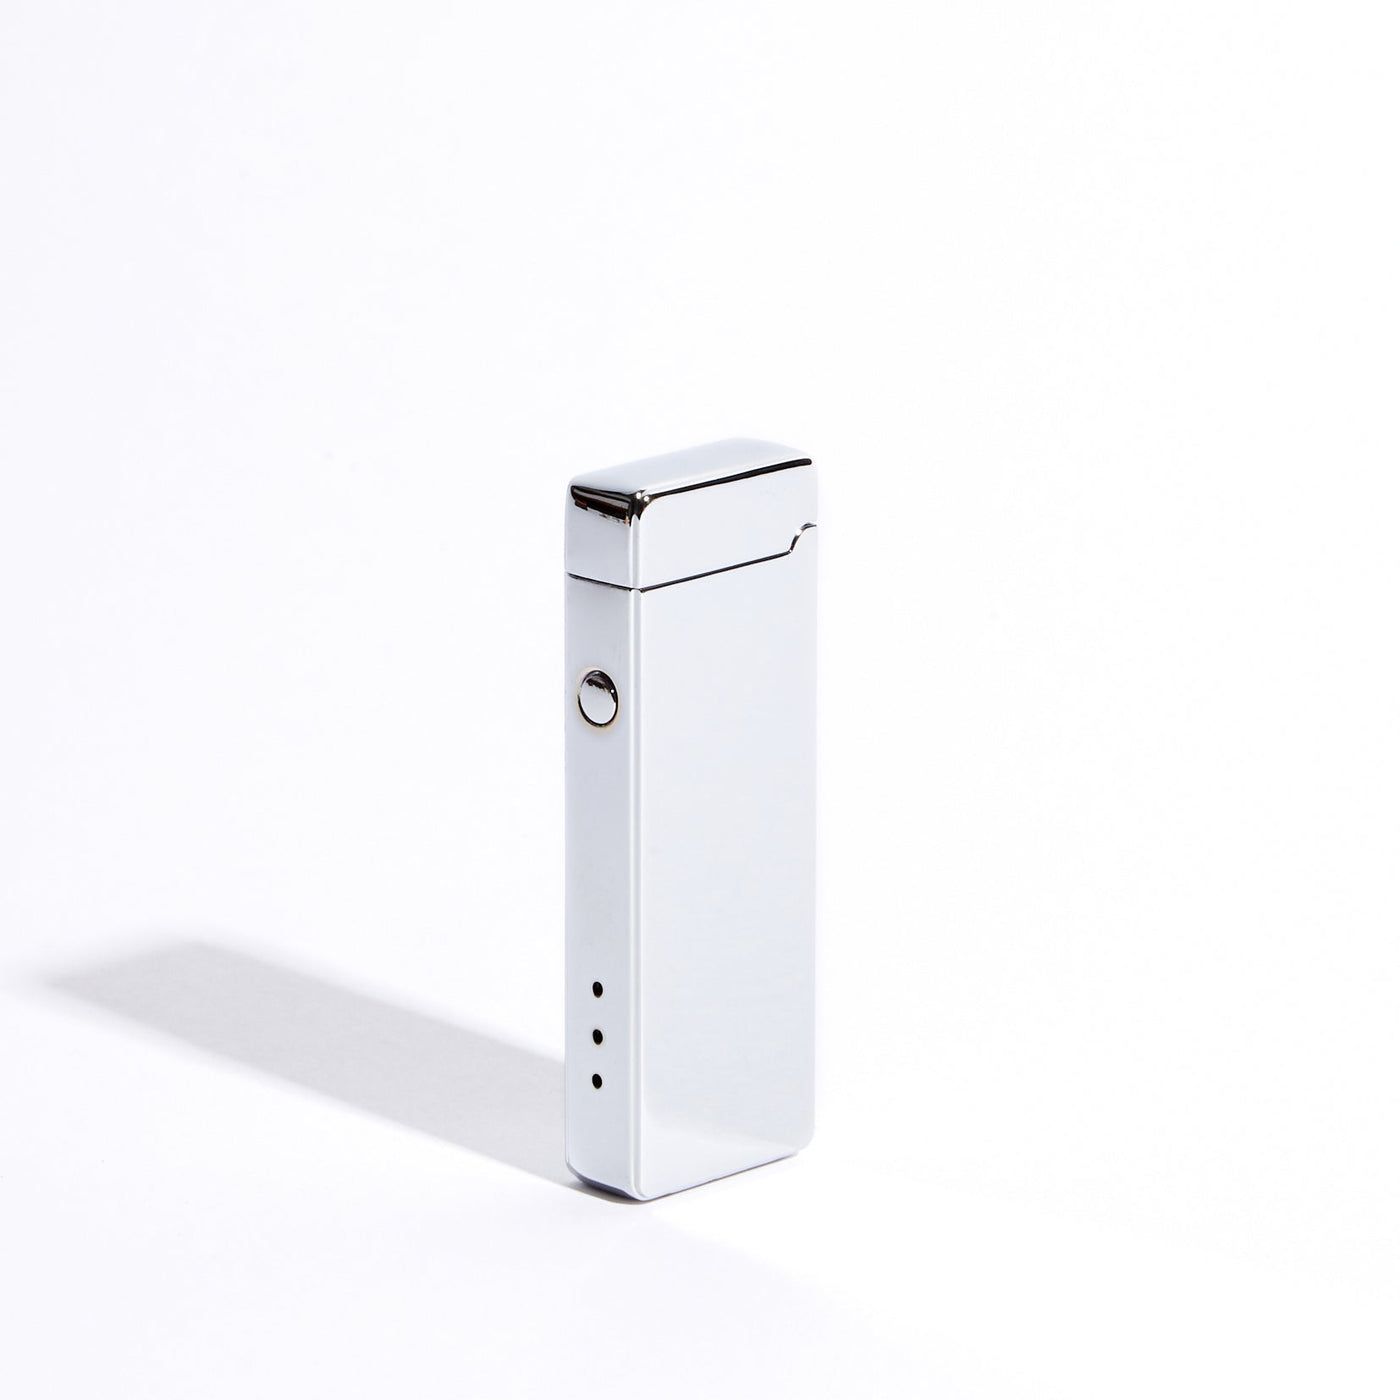 Pocket Lighter - Silver by The USB Lighter Company